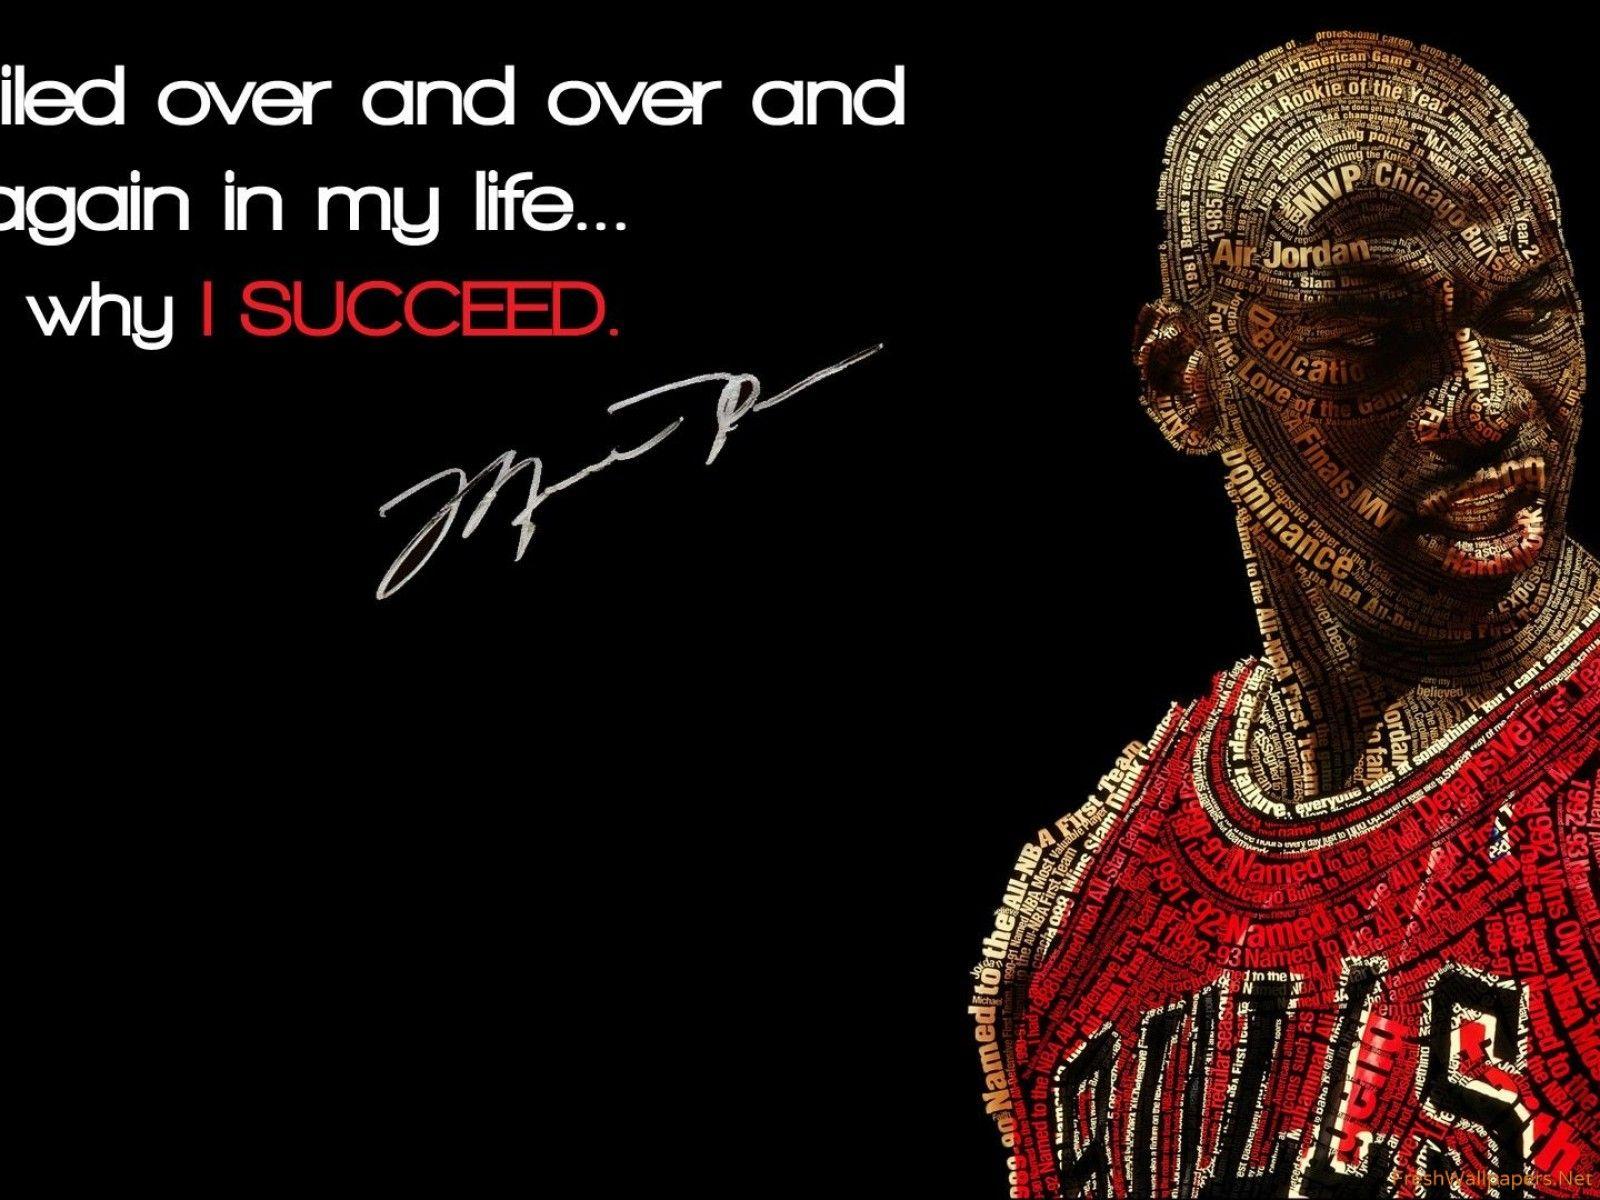 nike basketball quotes wallpaper